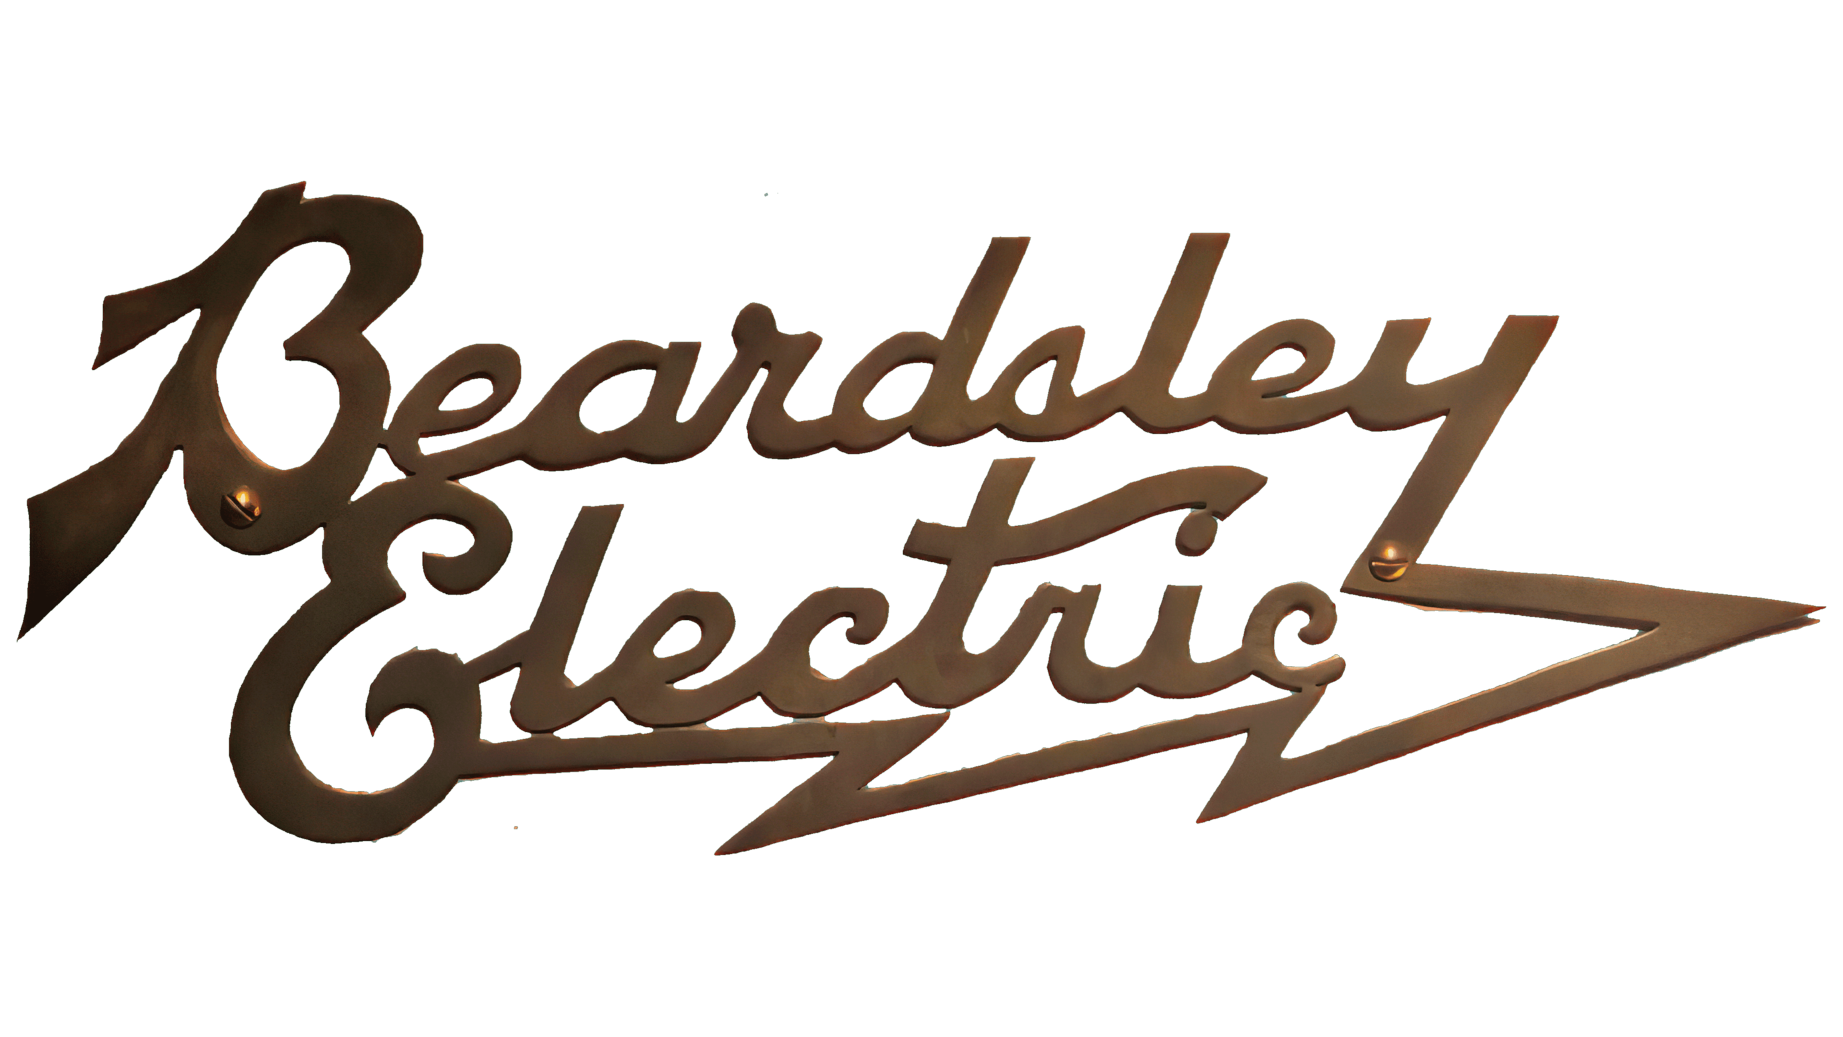 Beardsley electric company sign